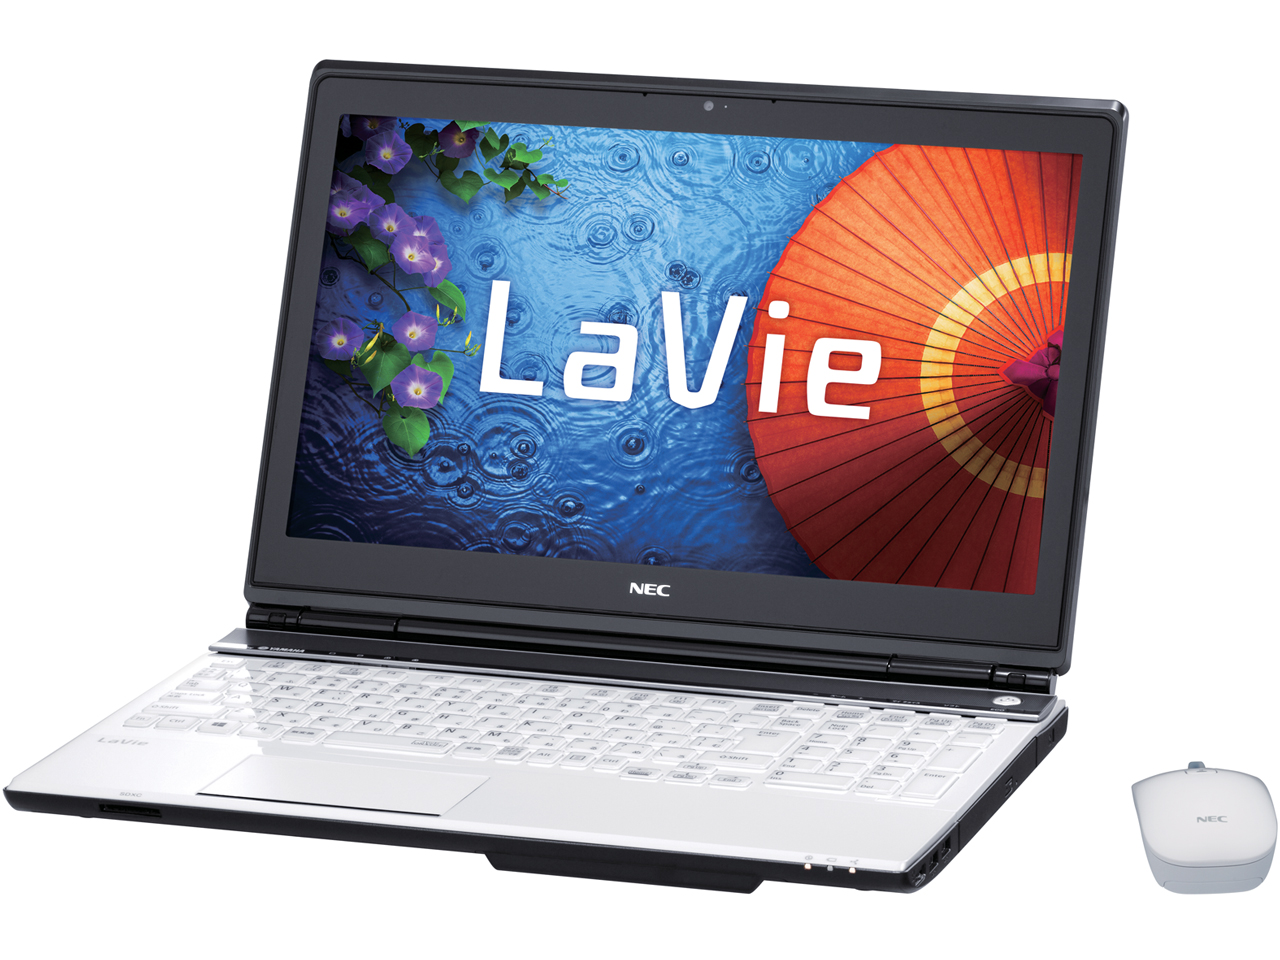 LaVie L LL750/SSW PC-LL750SSW [クリスタルホワイト]